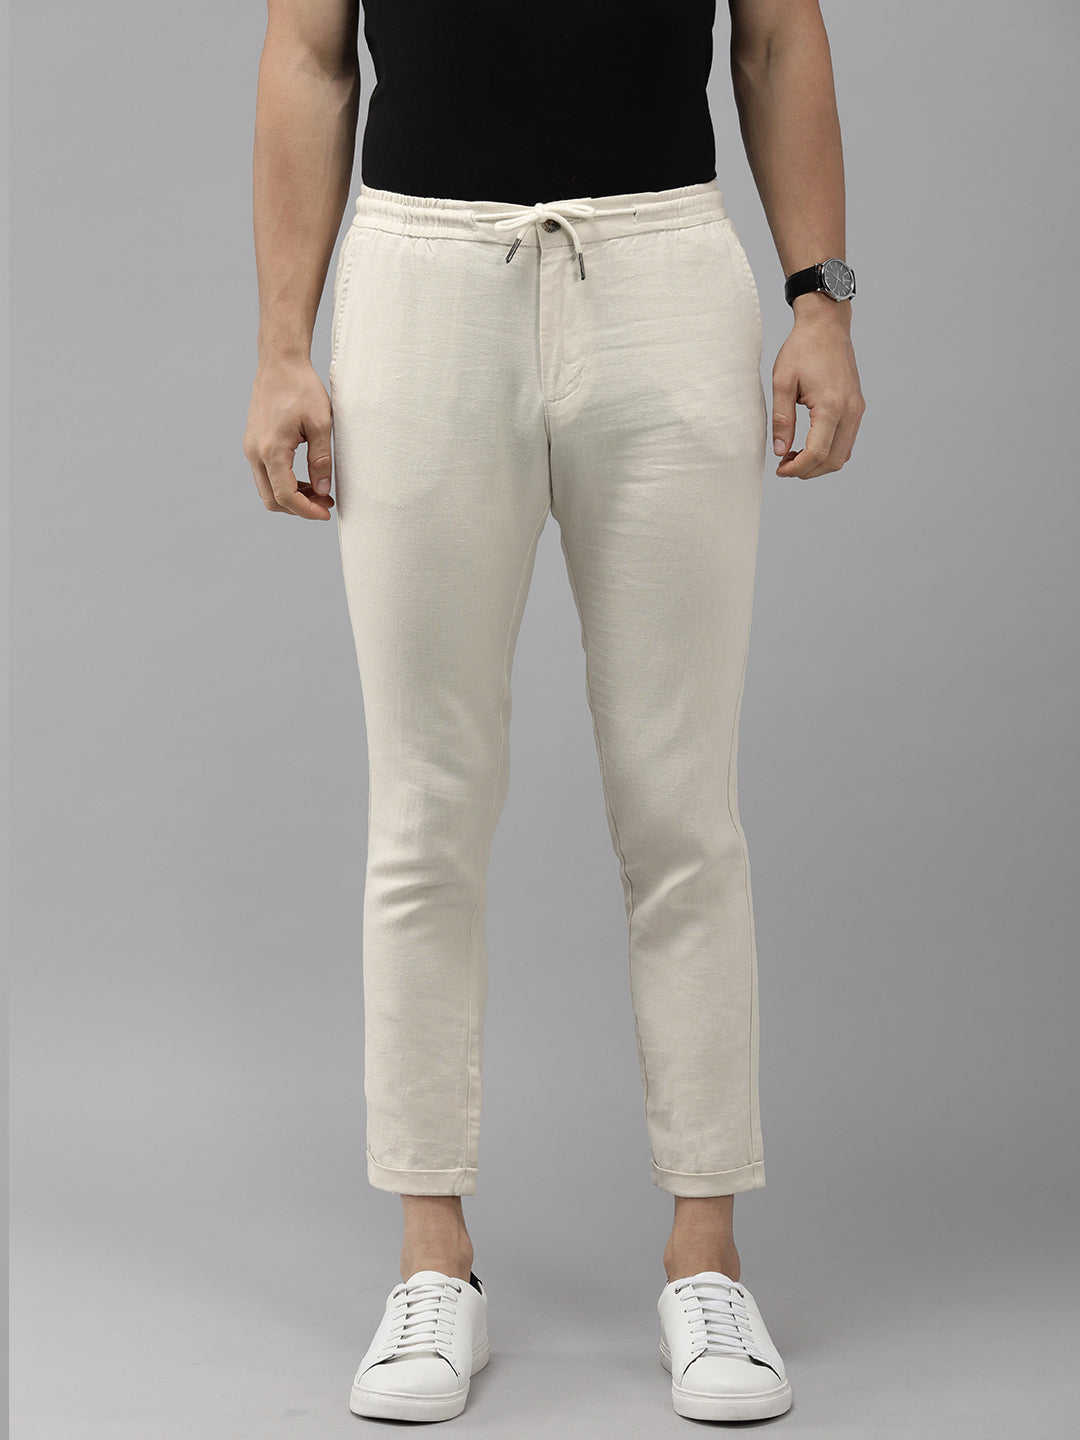 Buy Men Cream Dark Wash Slim Tapered Jeans Online  716018  Peter England